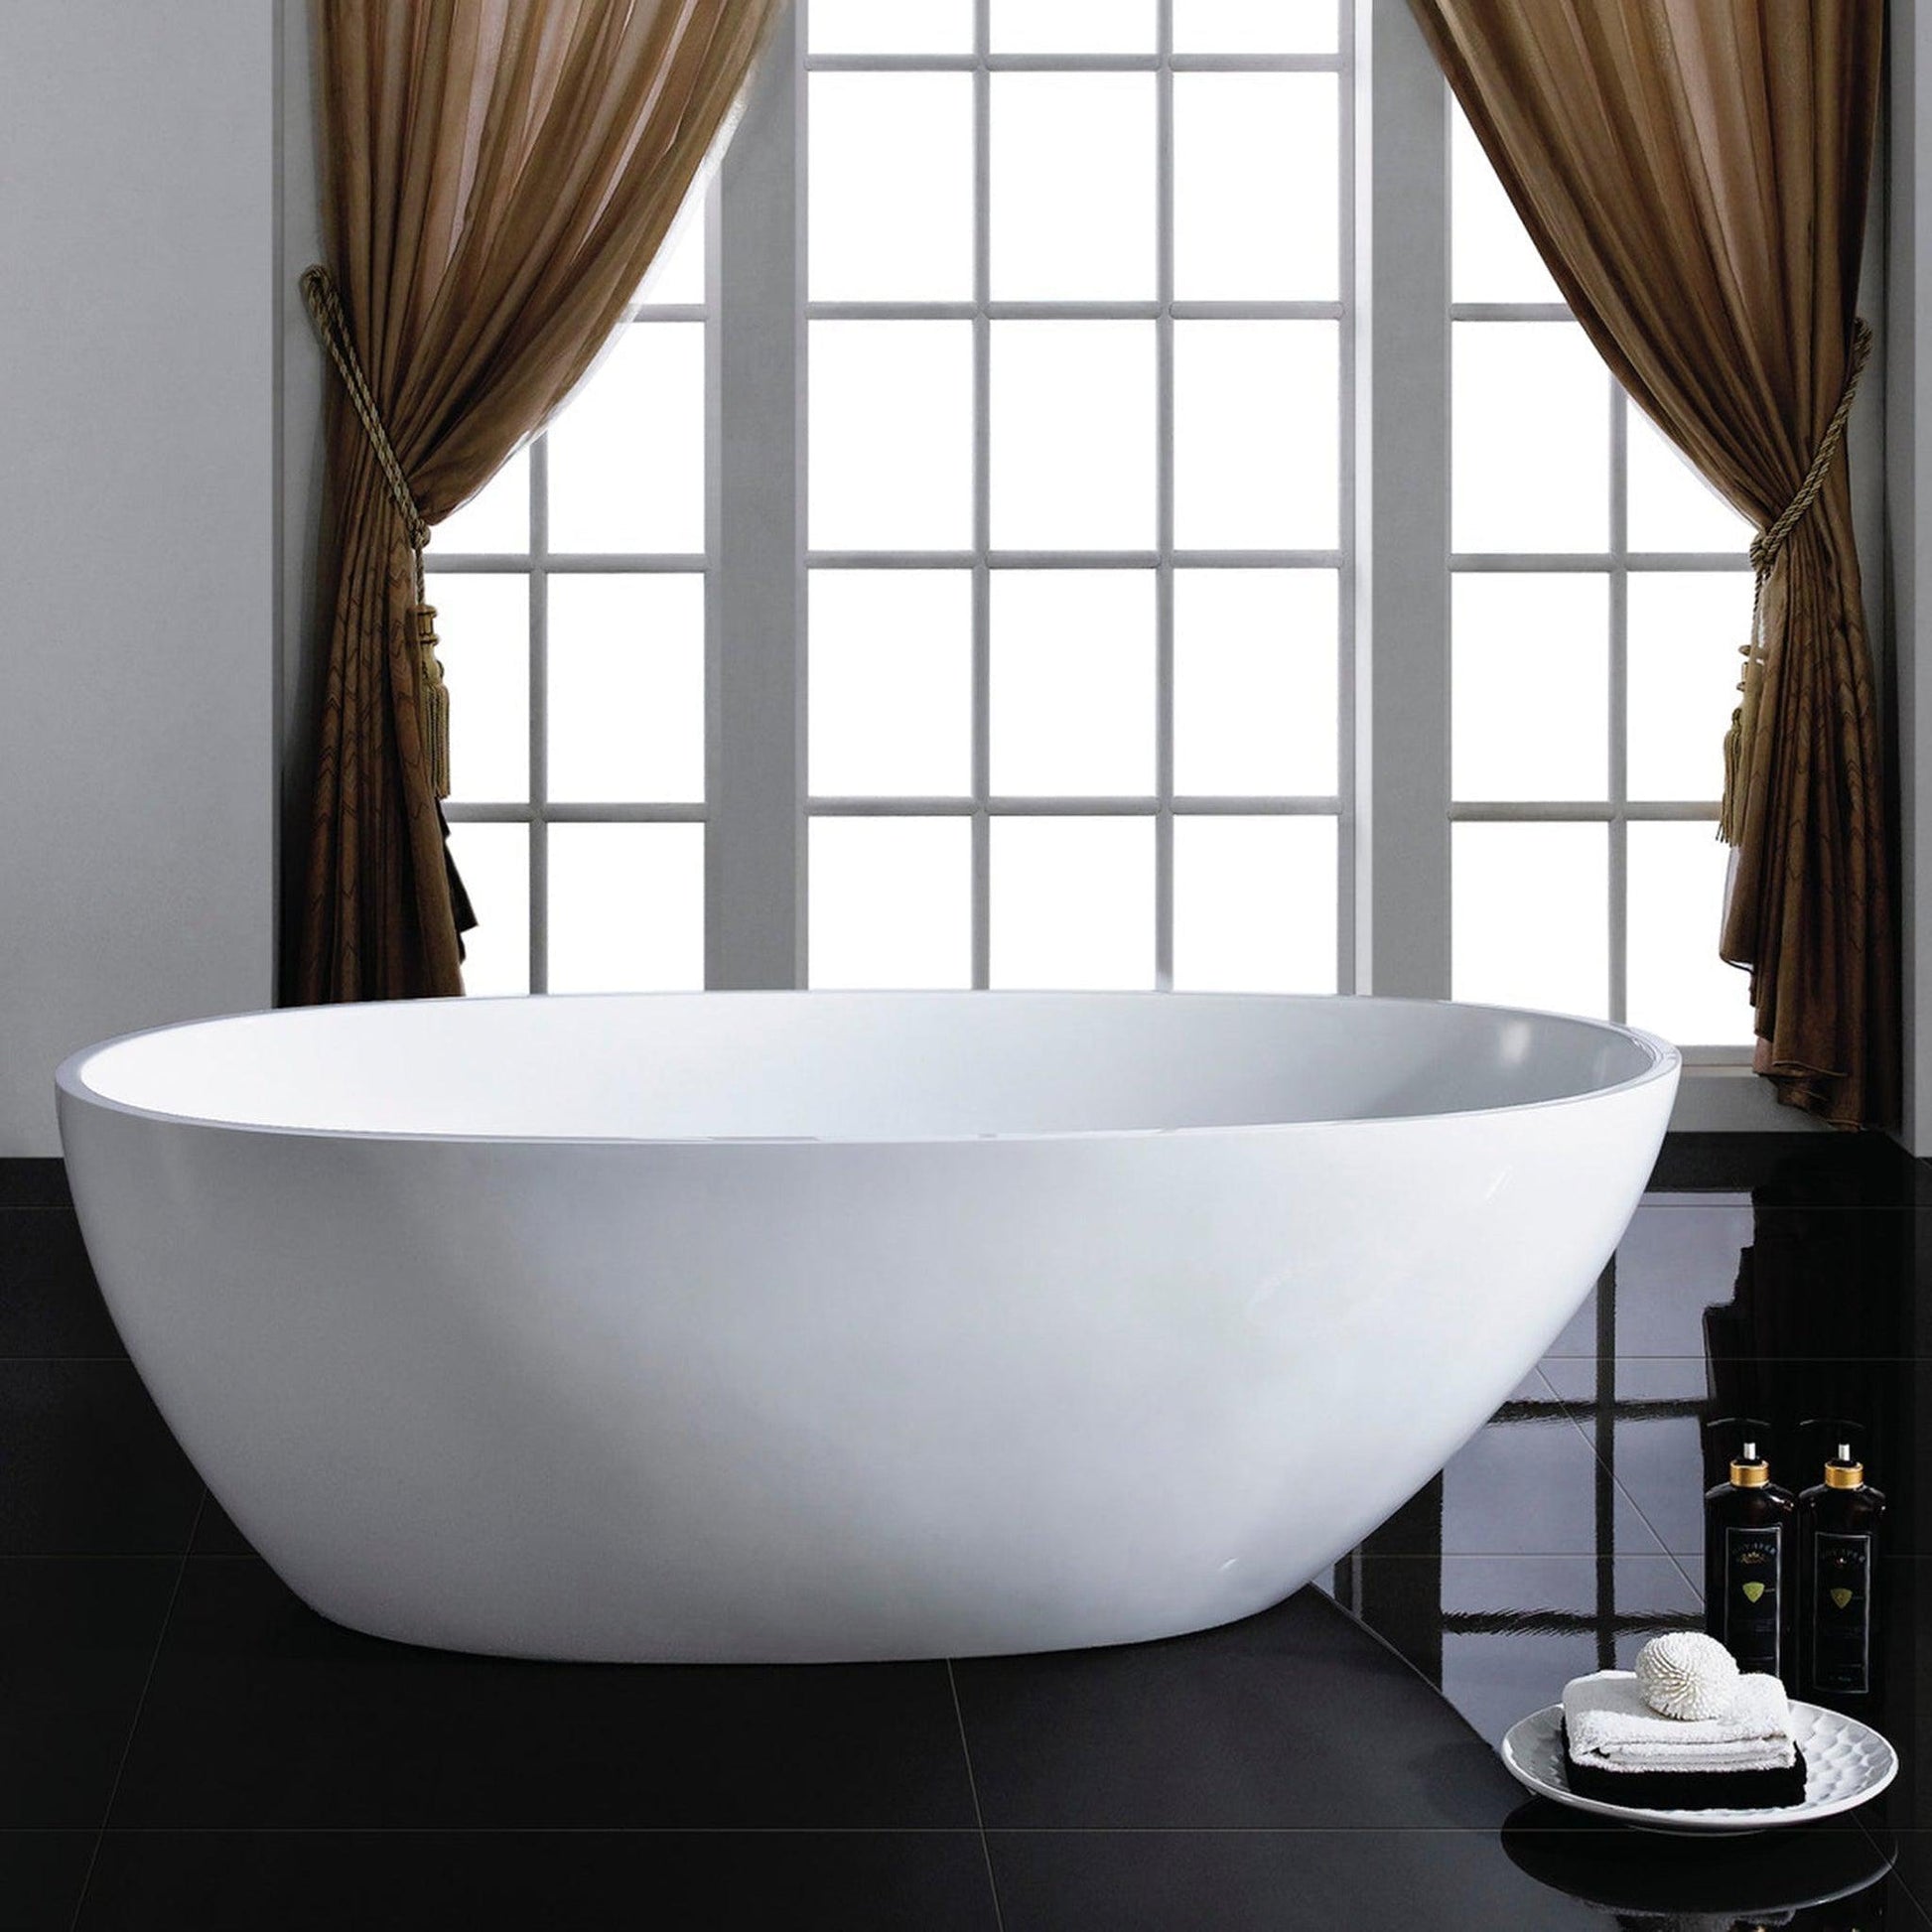 Eviva Sarah 55" x 34" White Freestanding Oval Shape Acrylic Soaking Bathtub